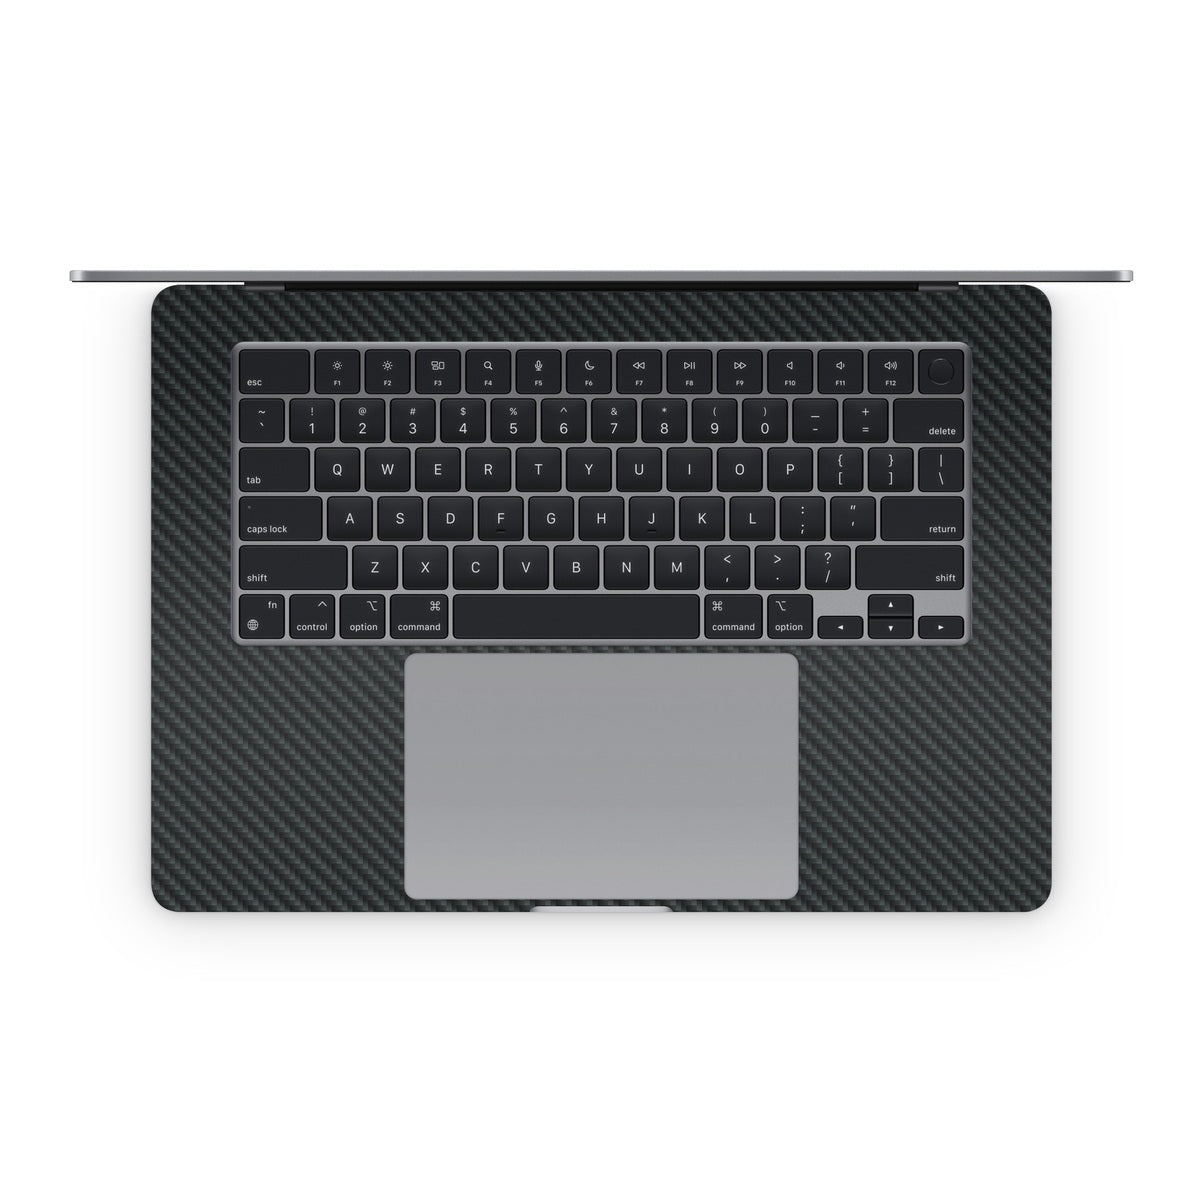 Carbon - Apple MacBook Skin